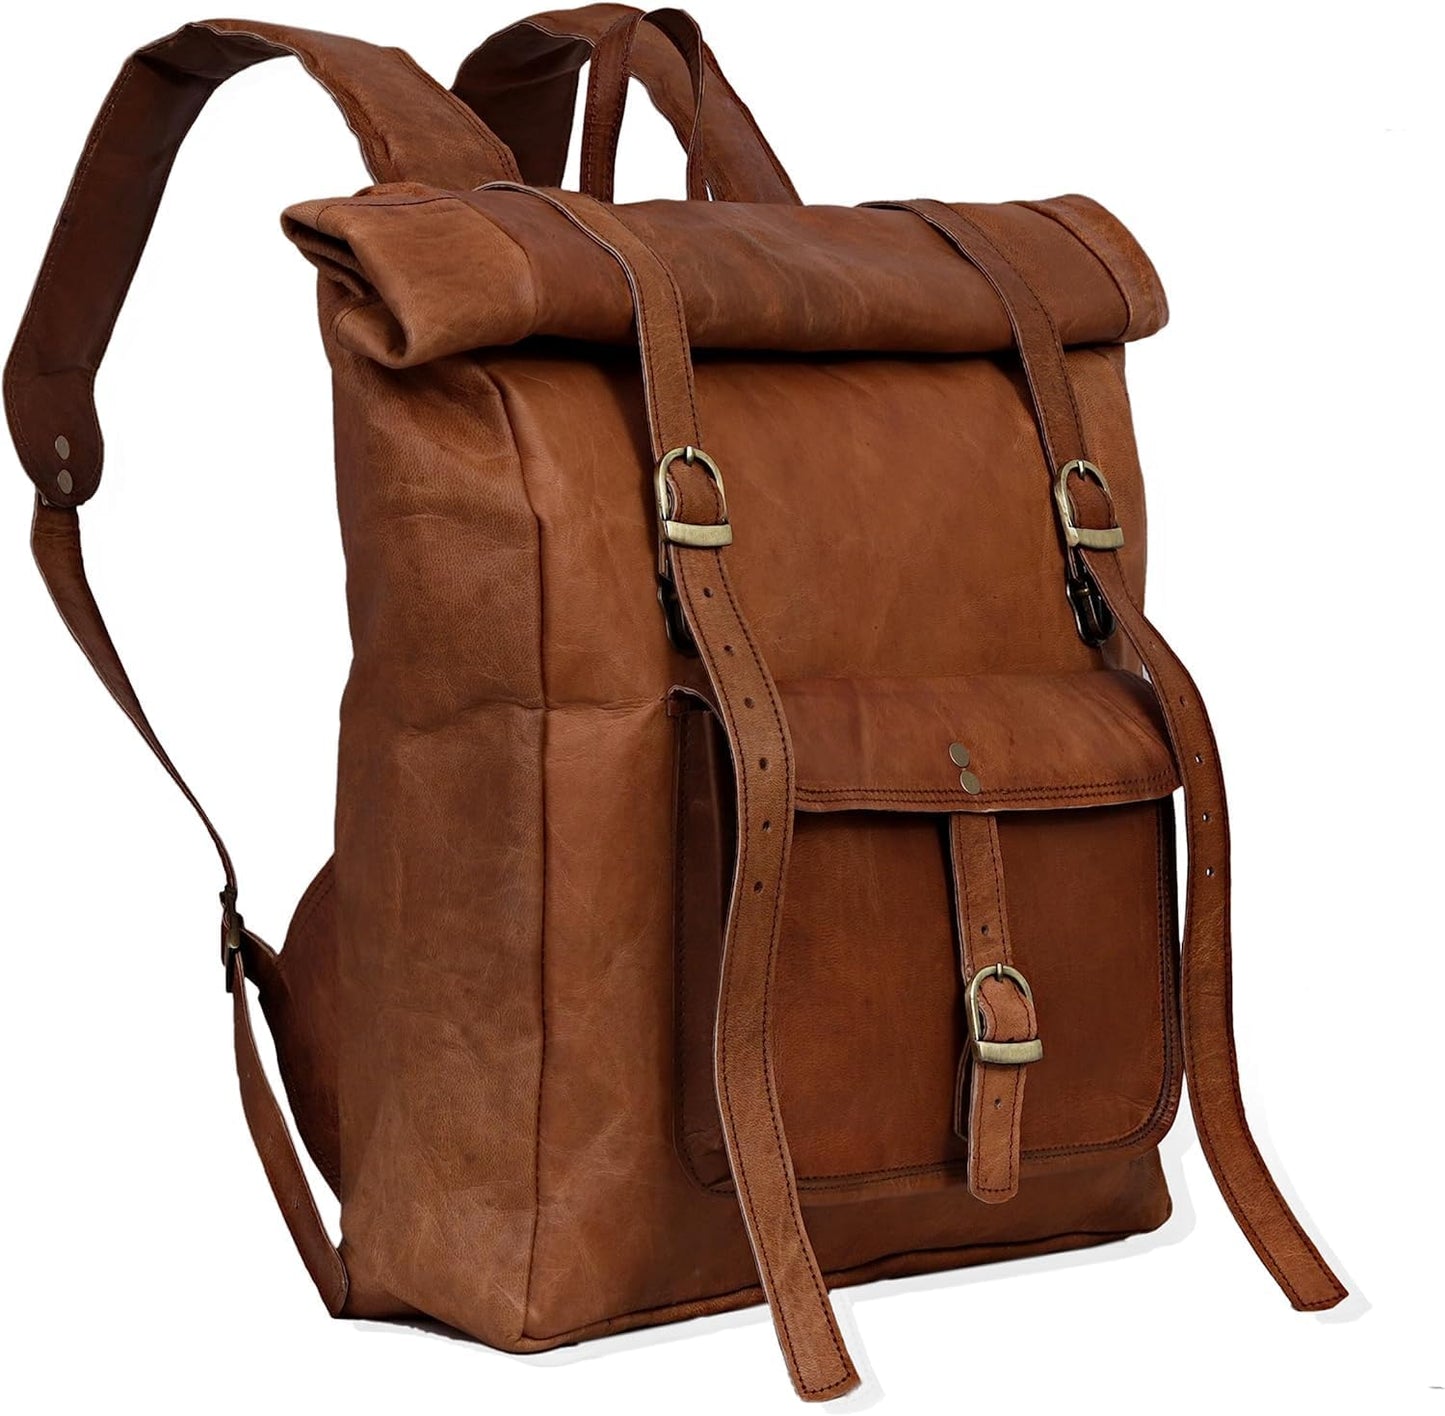 YUHIB 23" Brown Leather Backpack Vintage Rucksack